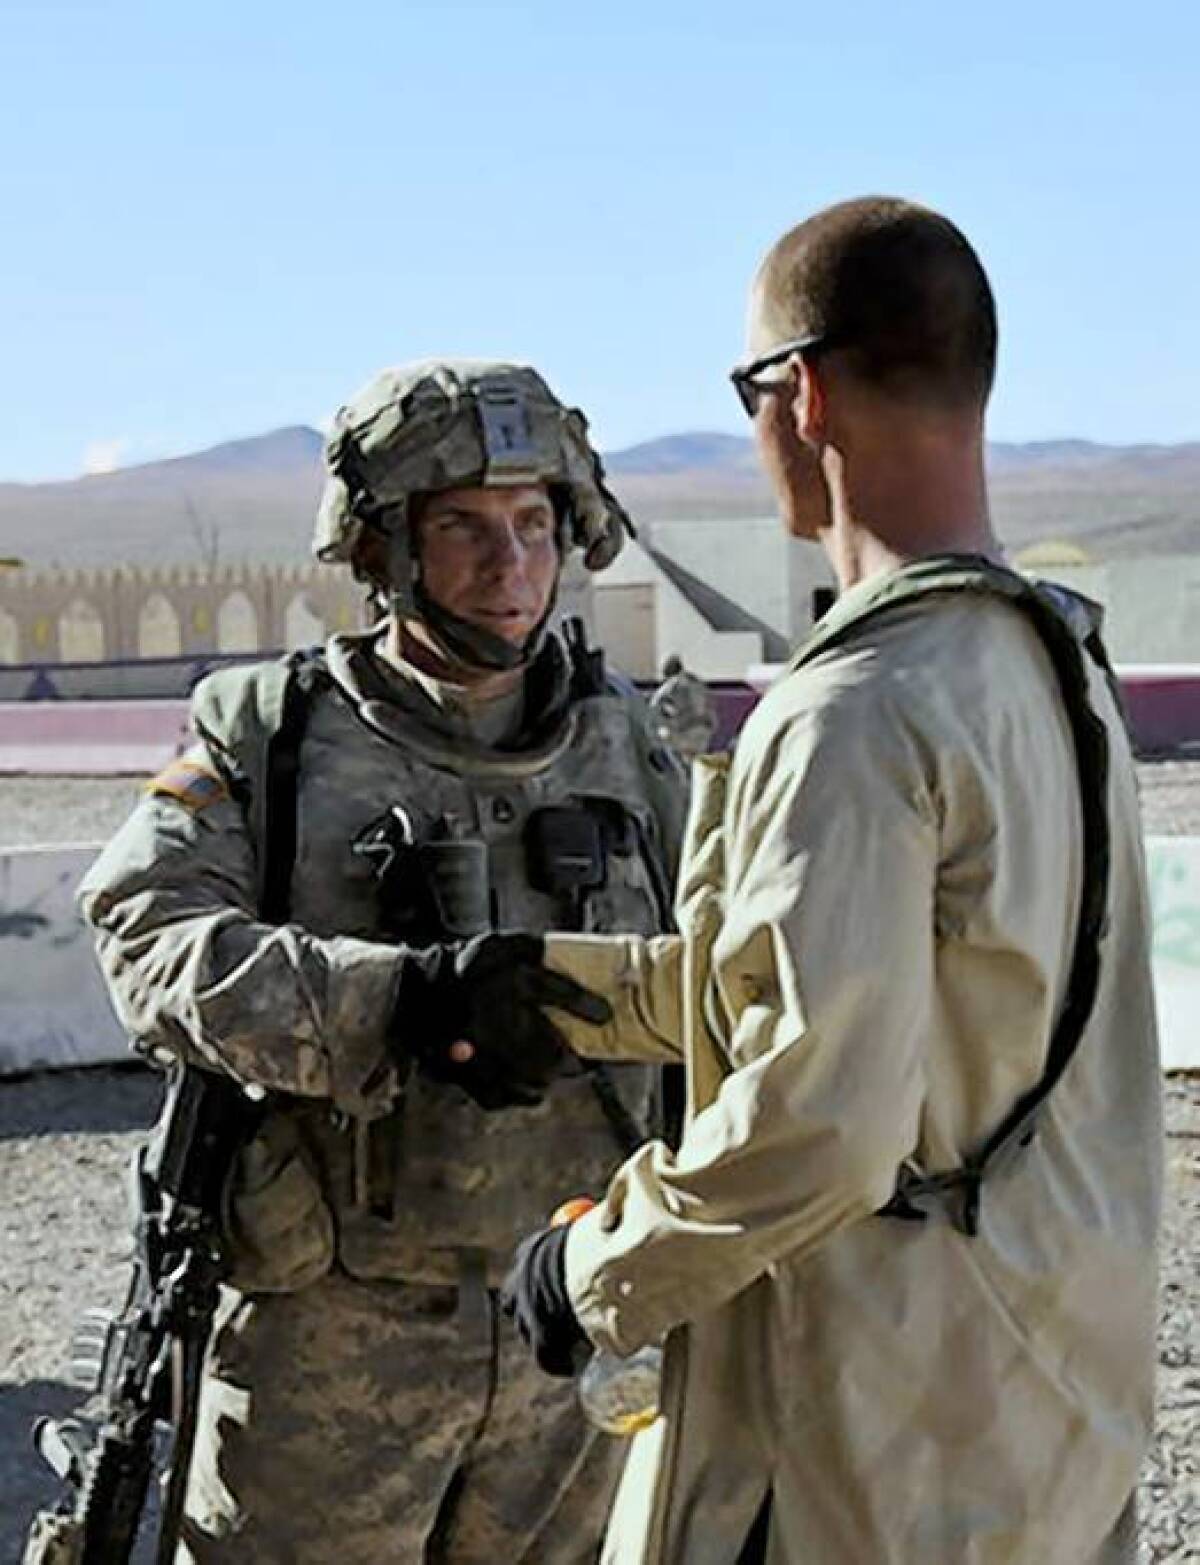 U.S. Army Staff Sgt. Robert Bales is accused in the killing of 16 Afghan civilians in their homes.